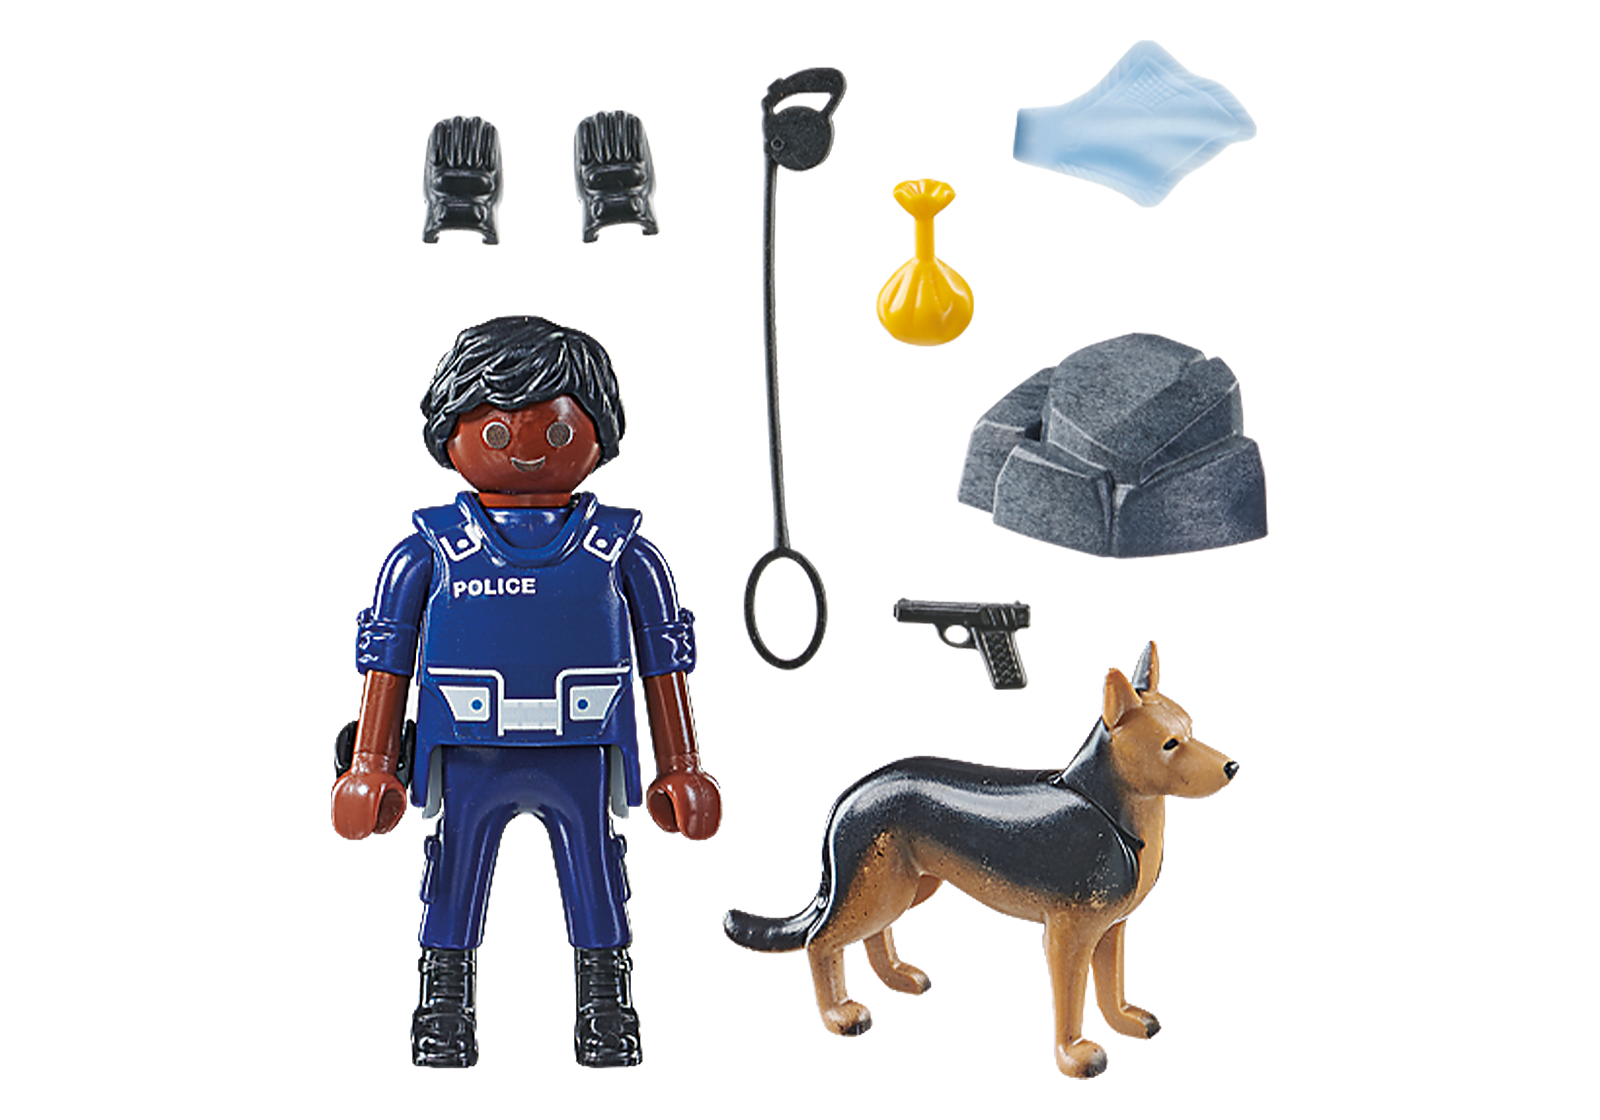 Playmobil Specials Plus: Policia Con Perro 71162